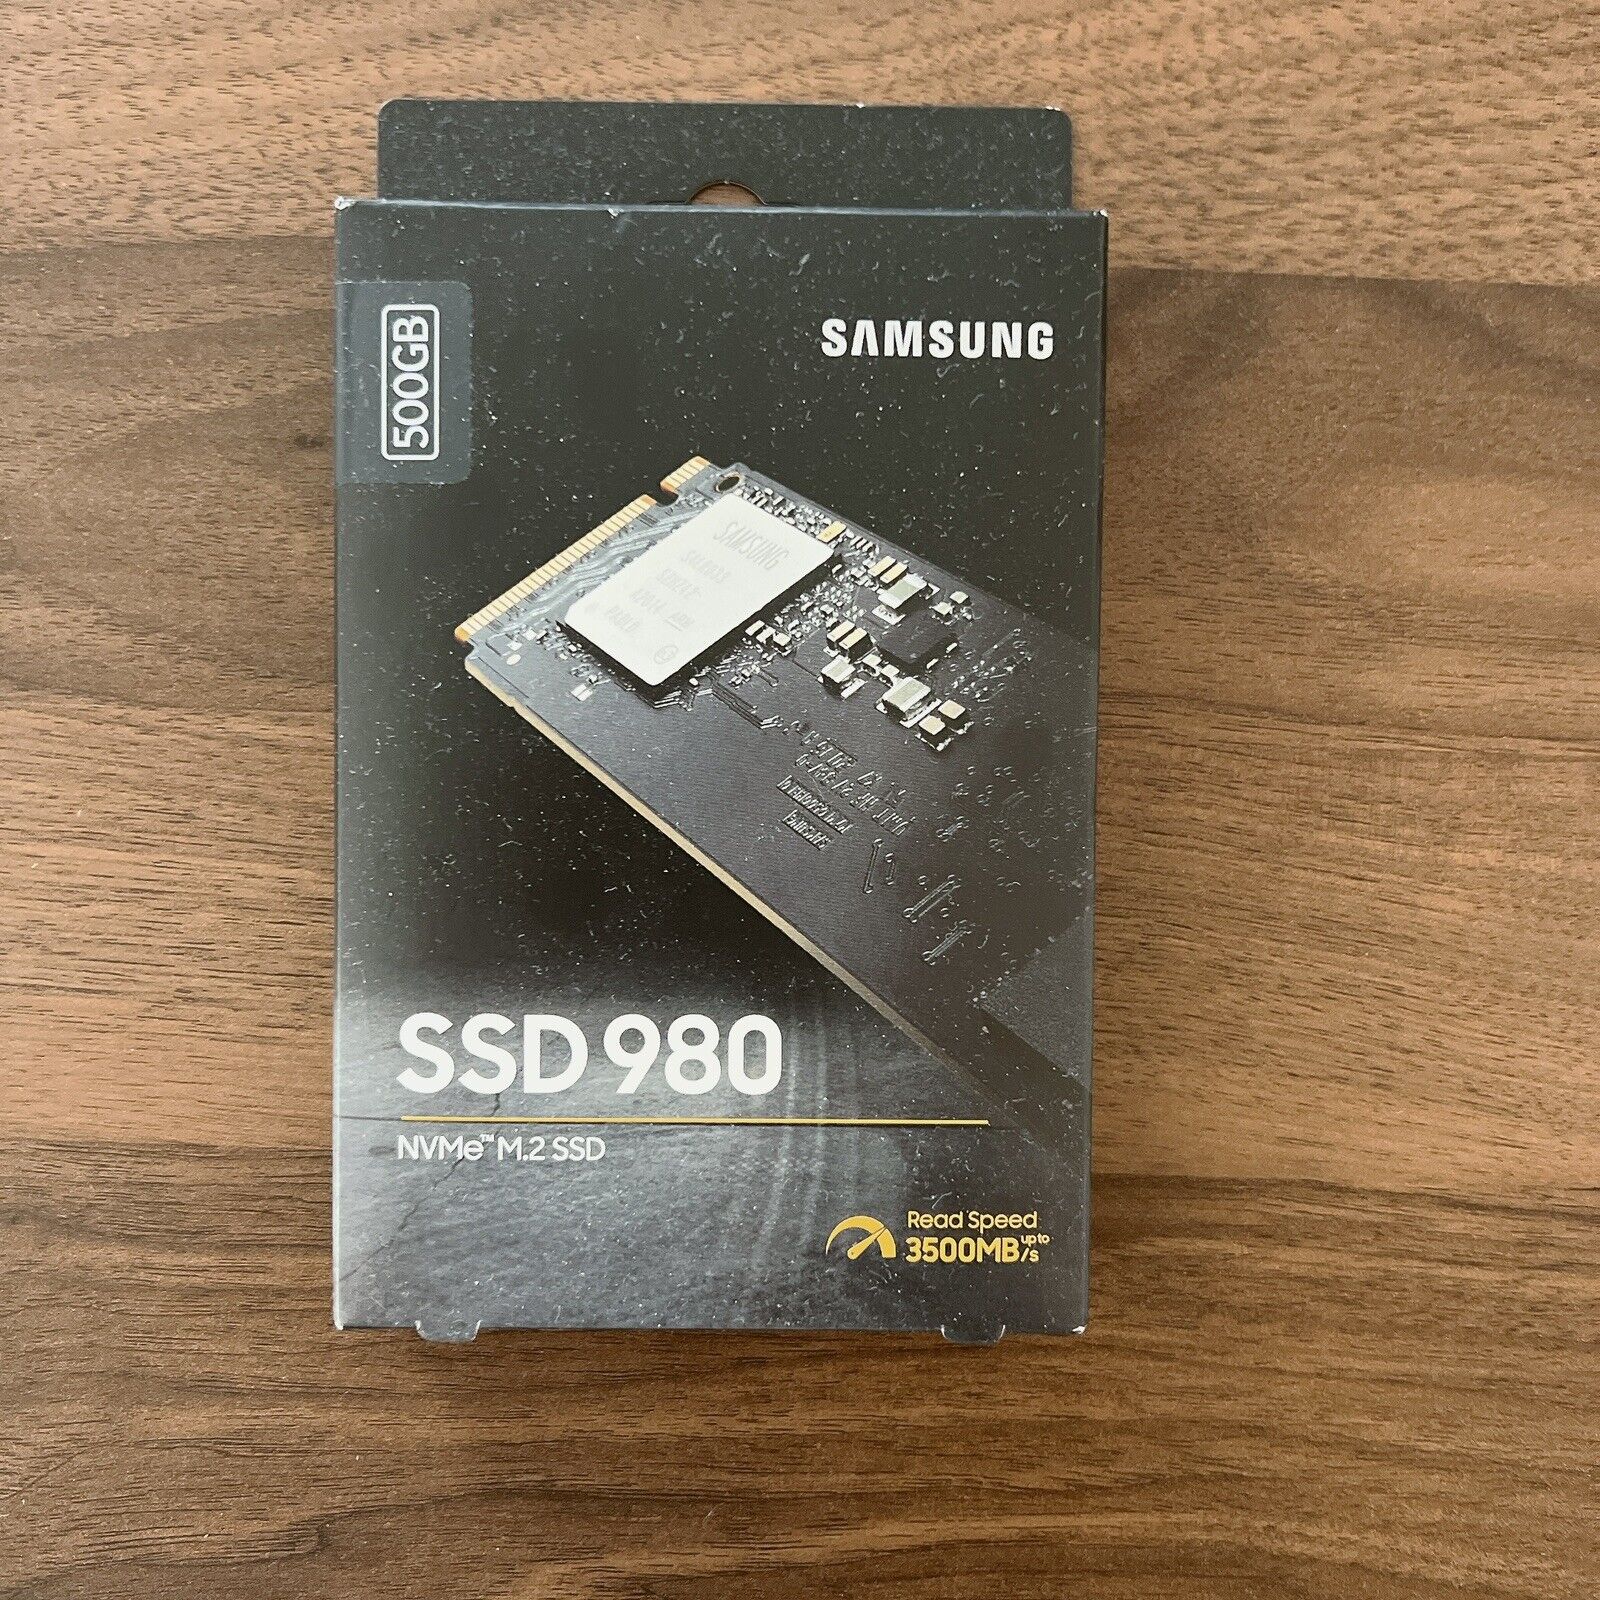 Brand New Samsung 980 500GB M.2 NVMe 2280 Internal Gaming SSD MZ-V8V500